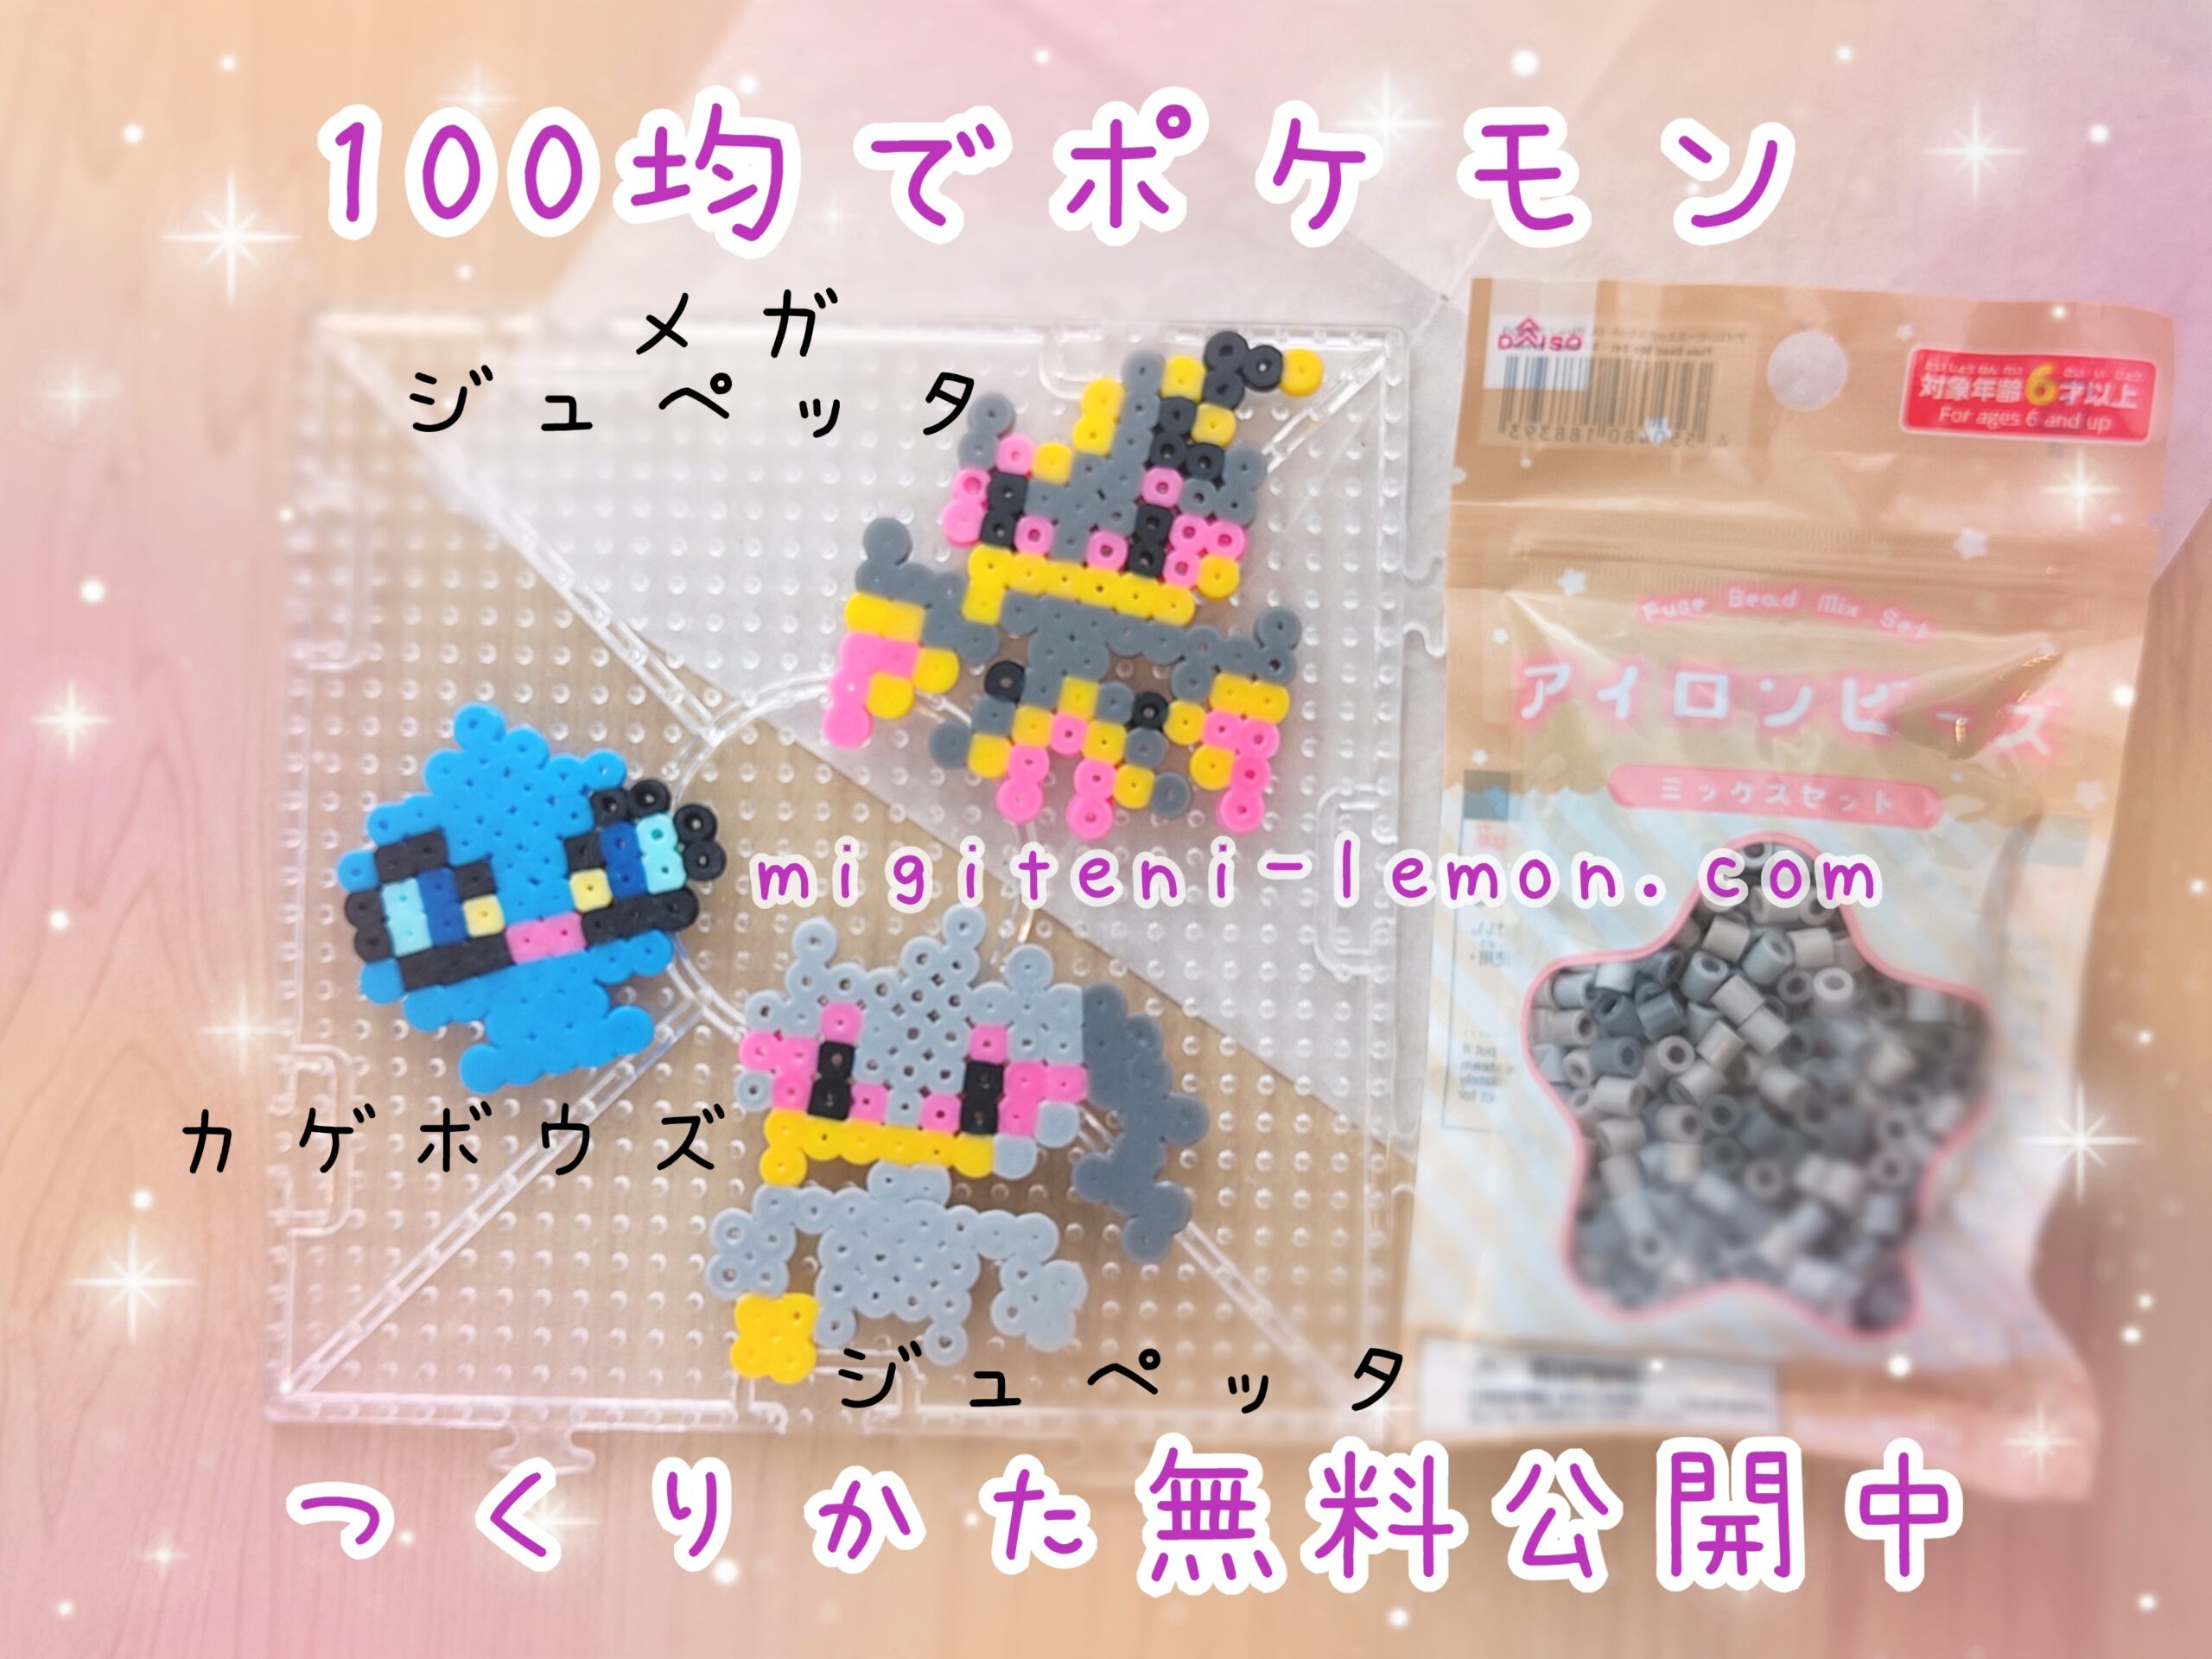 kagebouzu-shuppet-mega-juppeta-banette-small-pokemon-free-beads-zuan-handmade